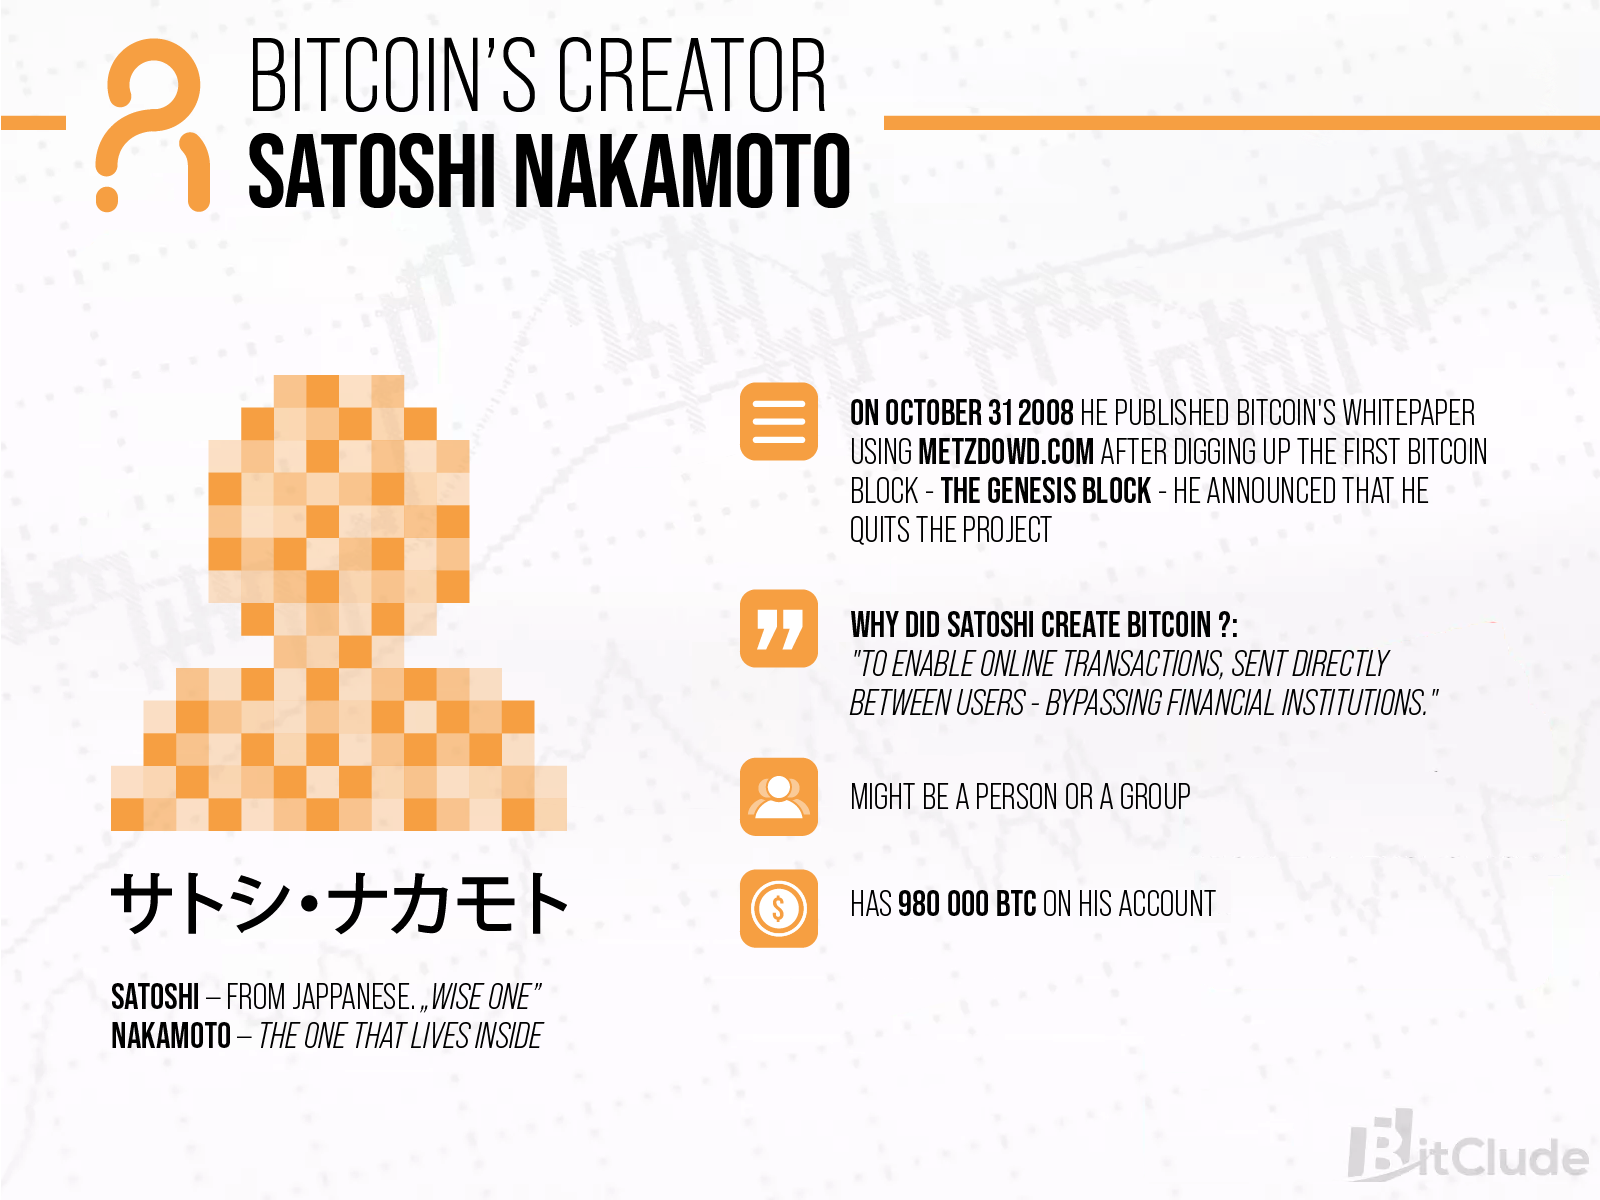 The creator or creators of Bitcoin hide under the anonymous nickname of Satoshi Nakamoto.